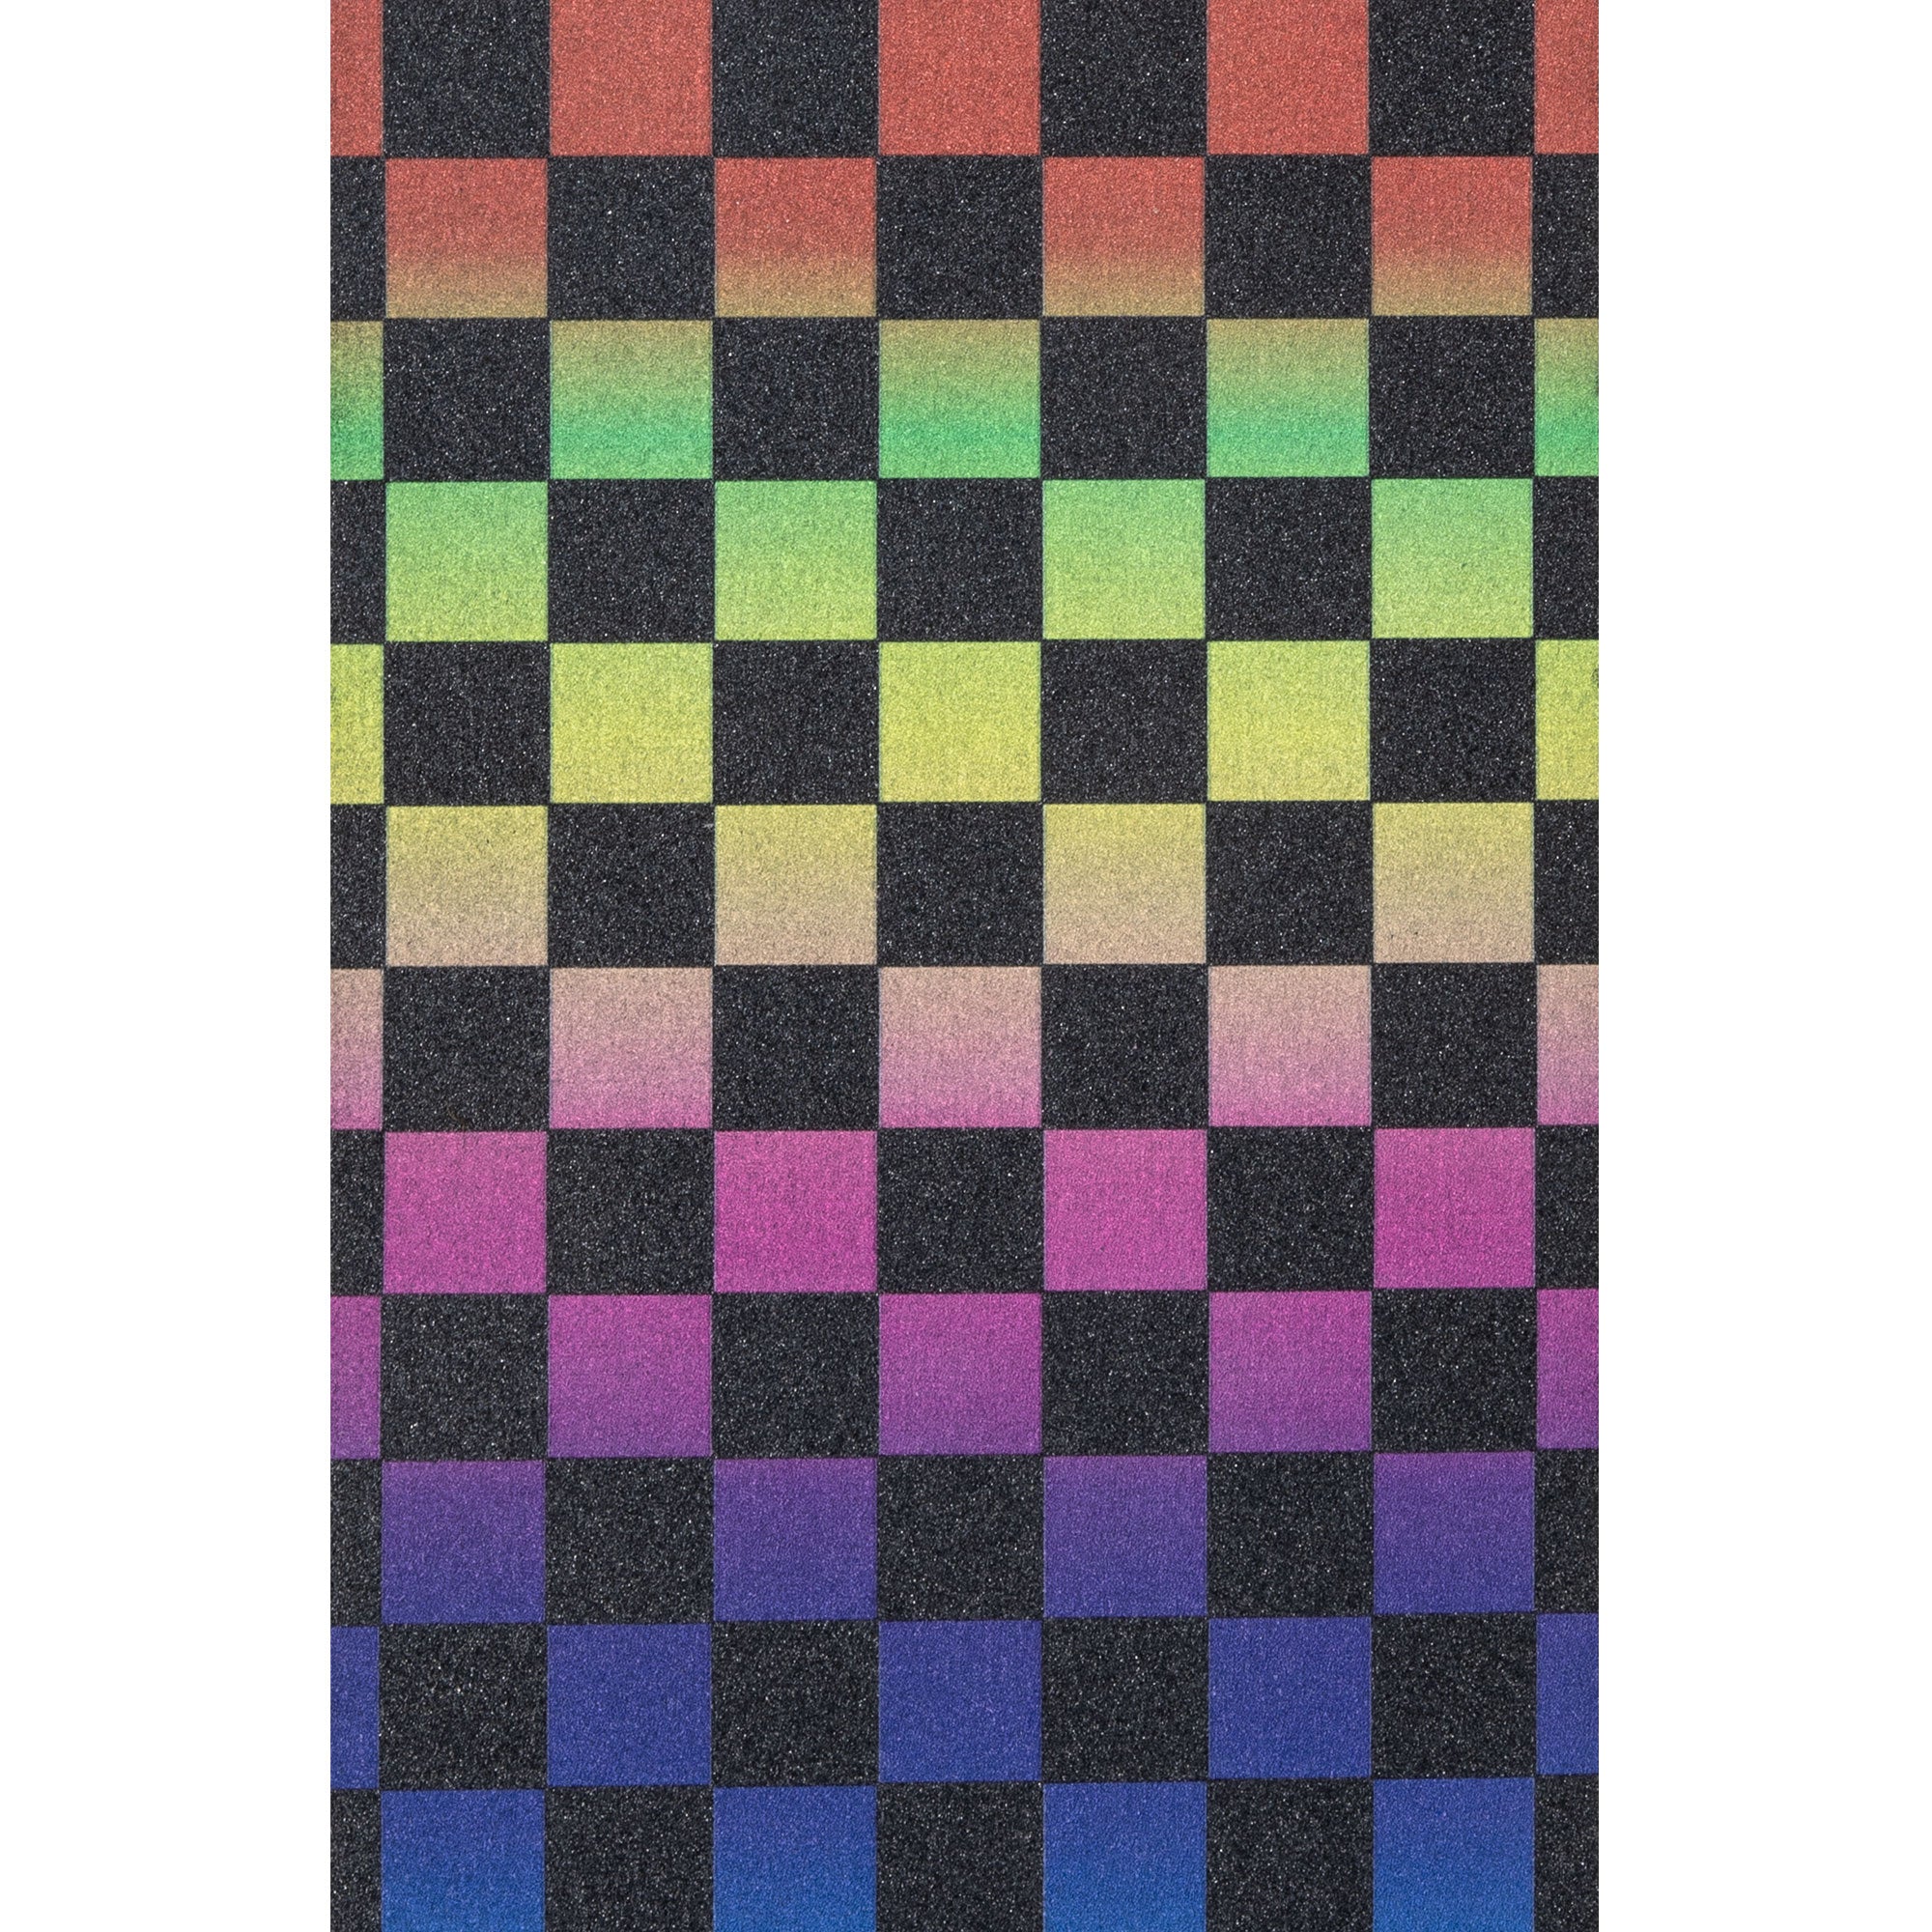 rainbow checkerboard